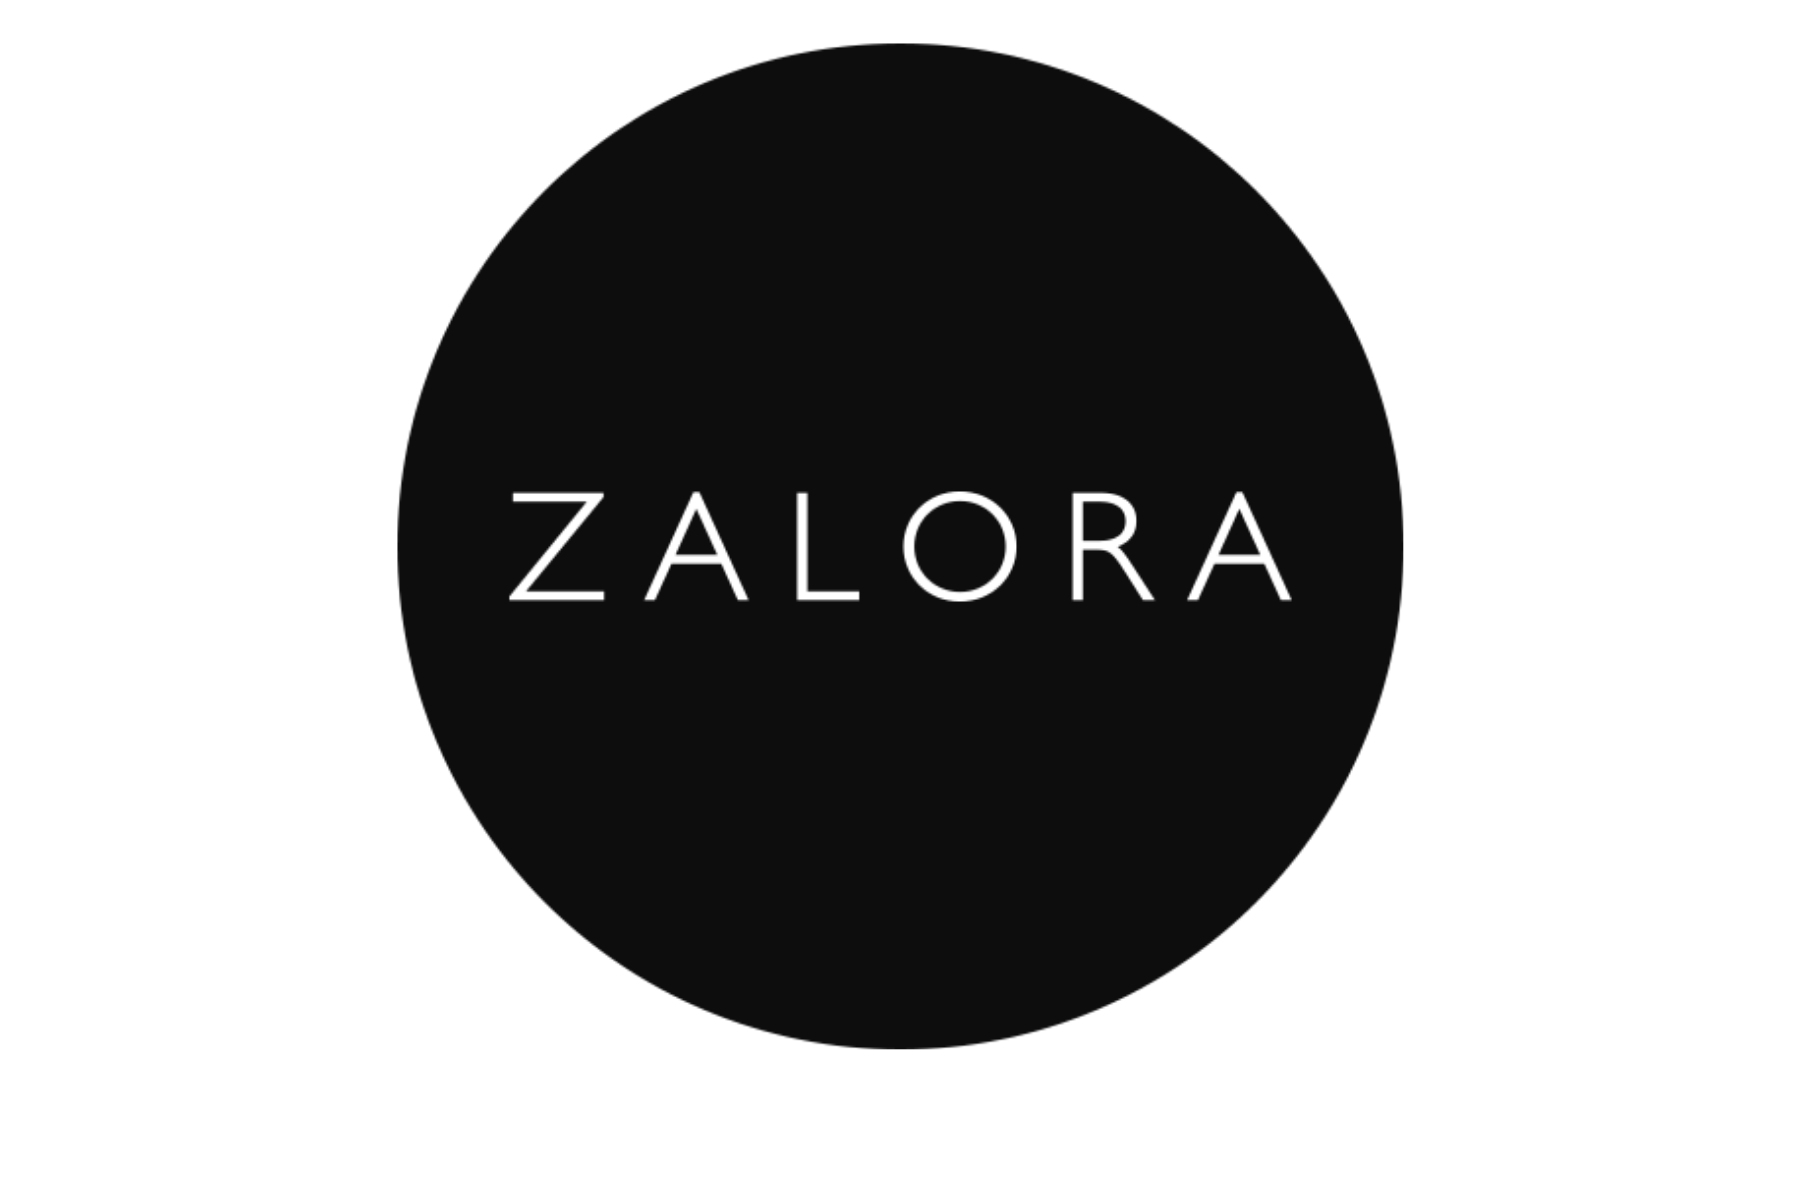 A Zalora logo with the word 'Zalora' inside a black circle